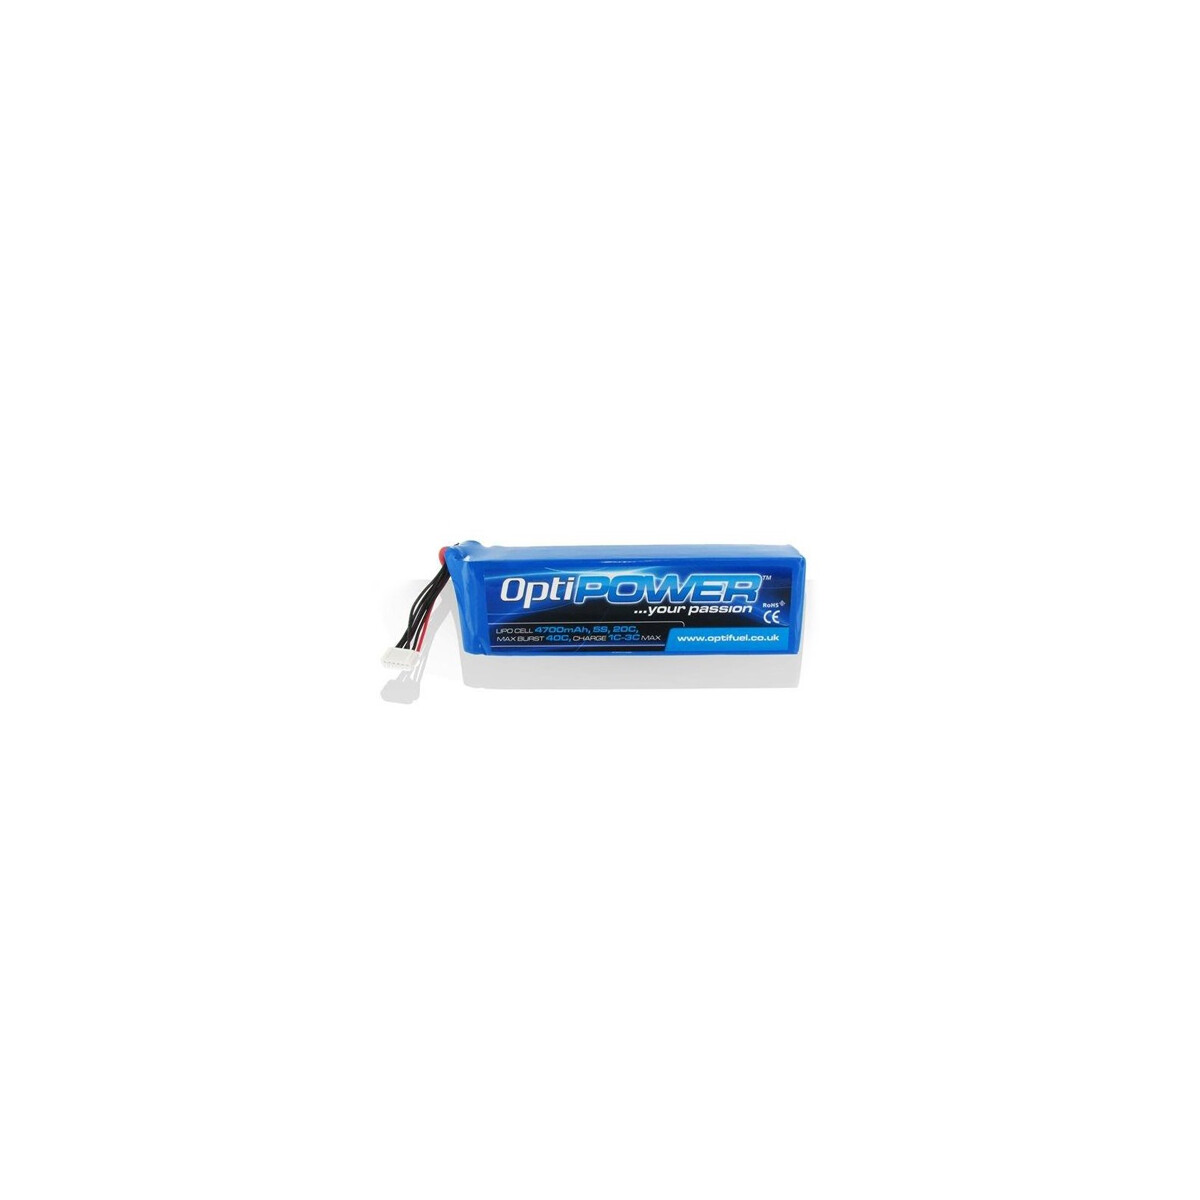 OptiPower Ultra 50C Lipo Cell Battery 4700mAh 5S 50C